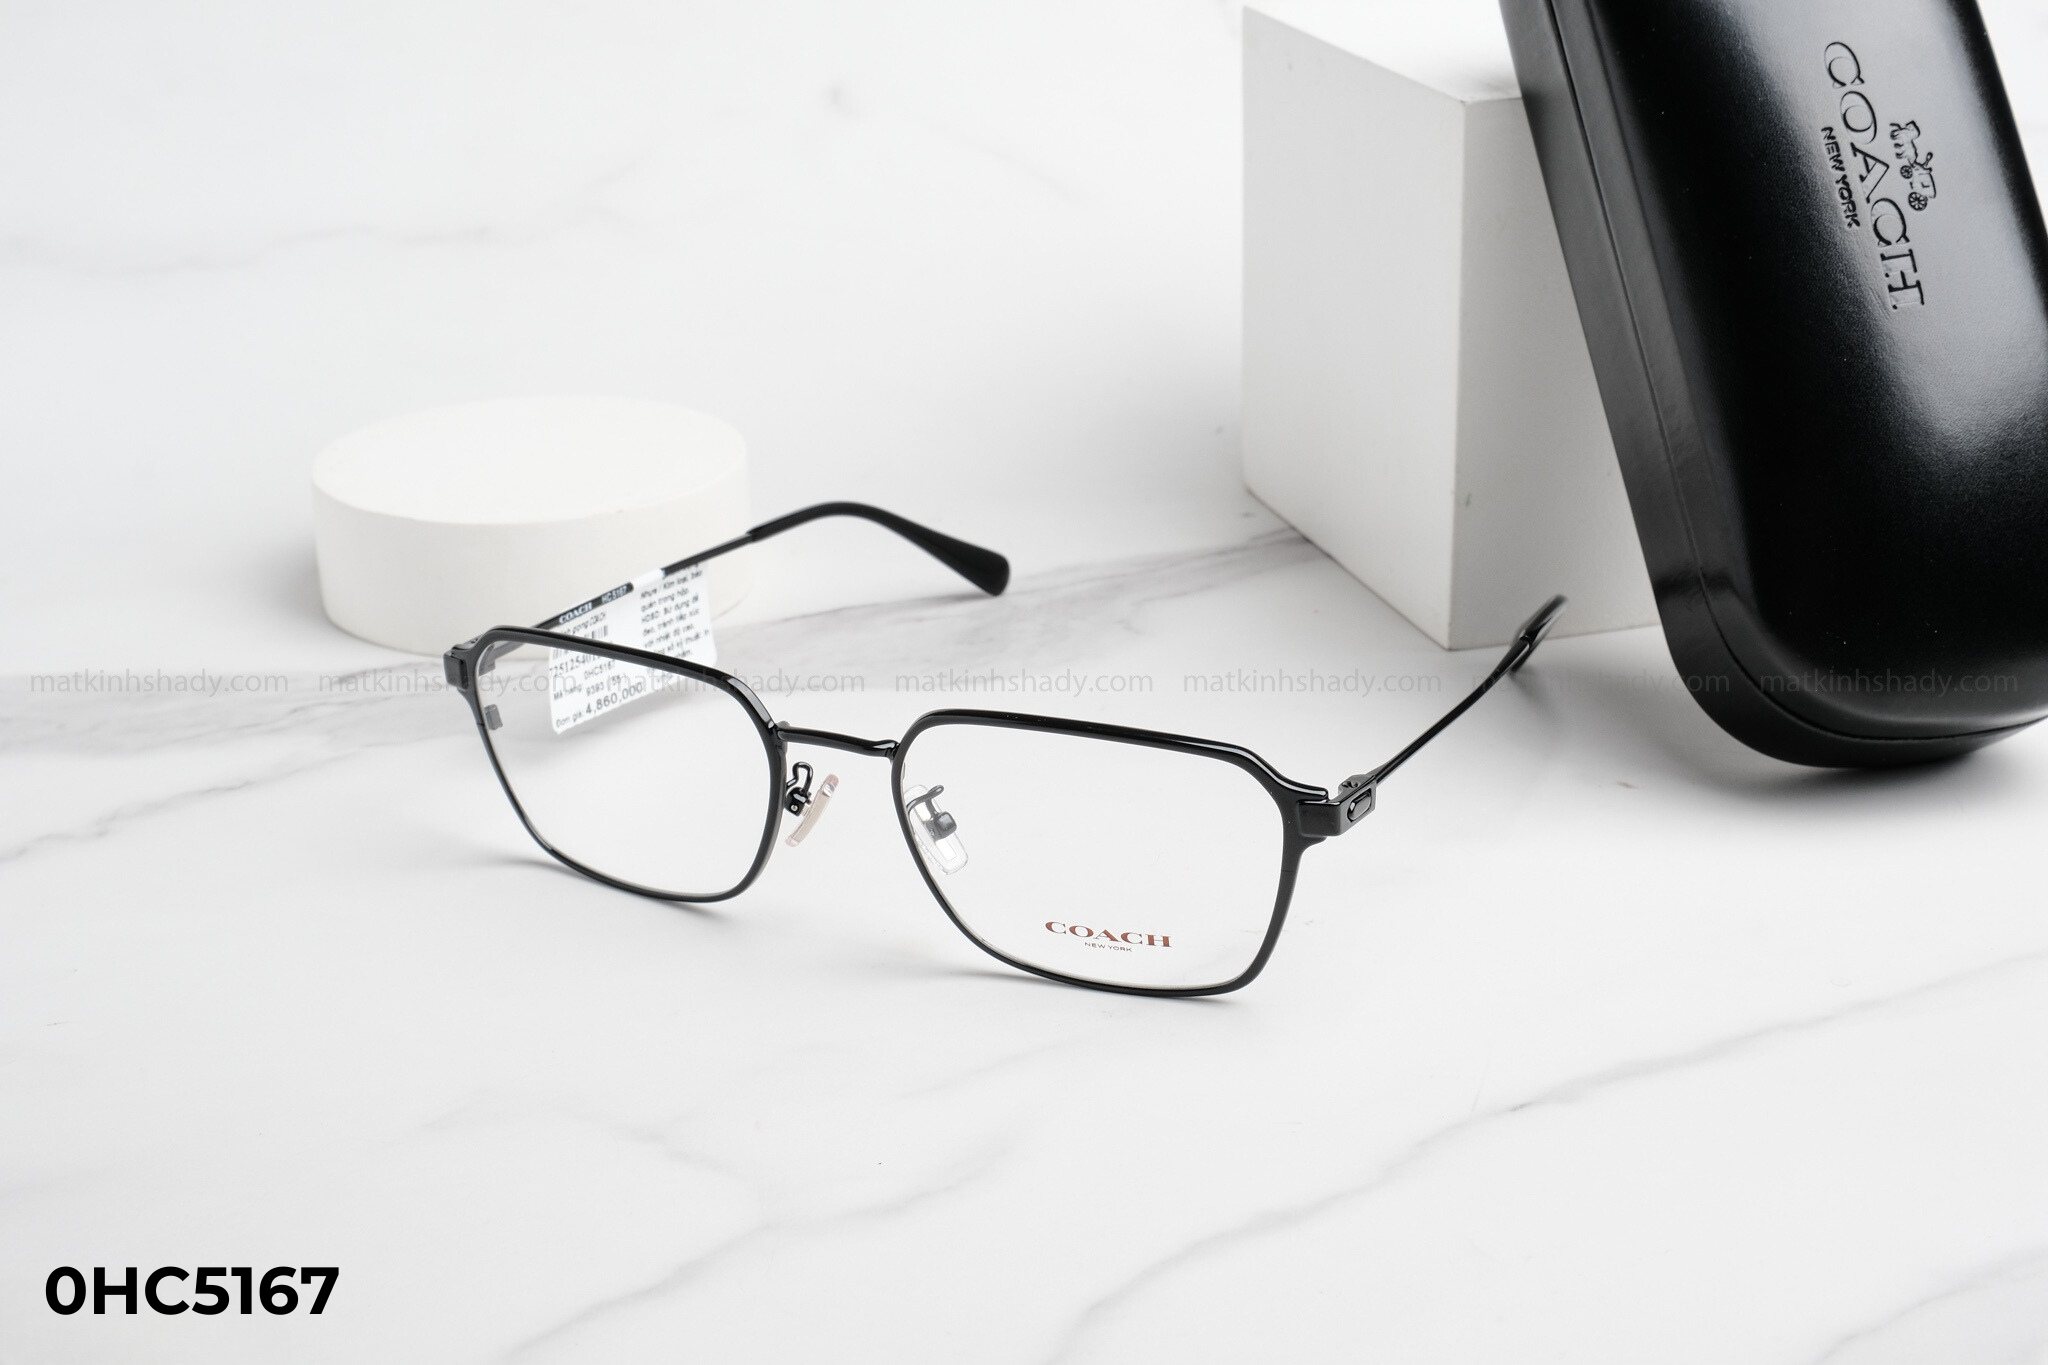  Coach Eyewear - Glasses - 0HC5167 